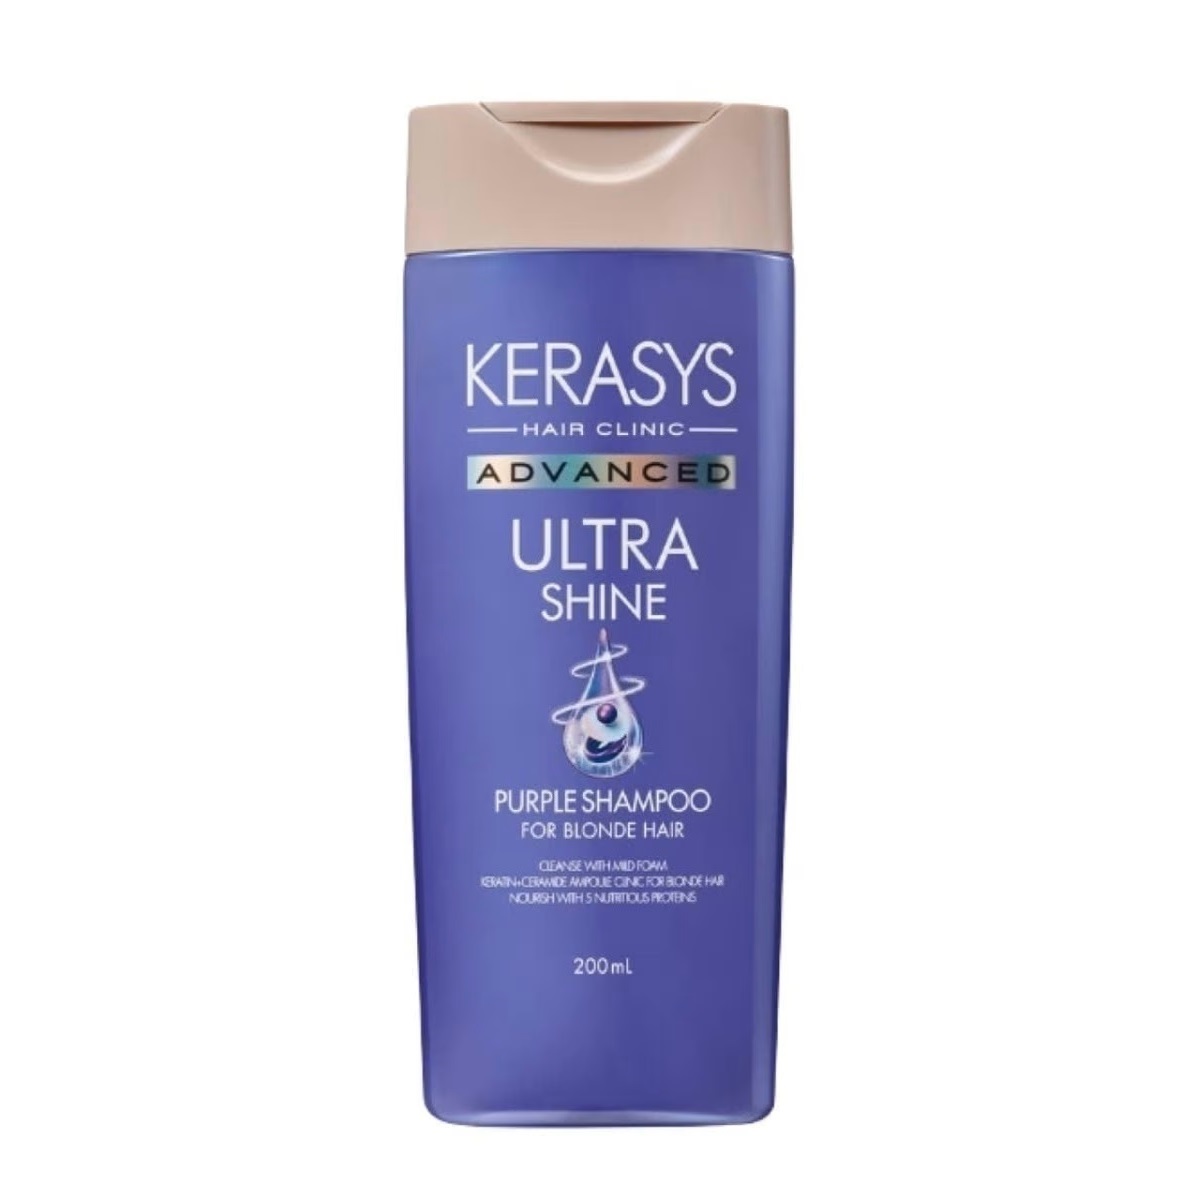 Kerasys Ампульный шампунь Идеальный блонд с церамидными ампулами Advanced, 200 мл (Kerasys, Hair Clinic)